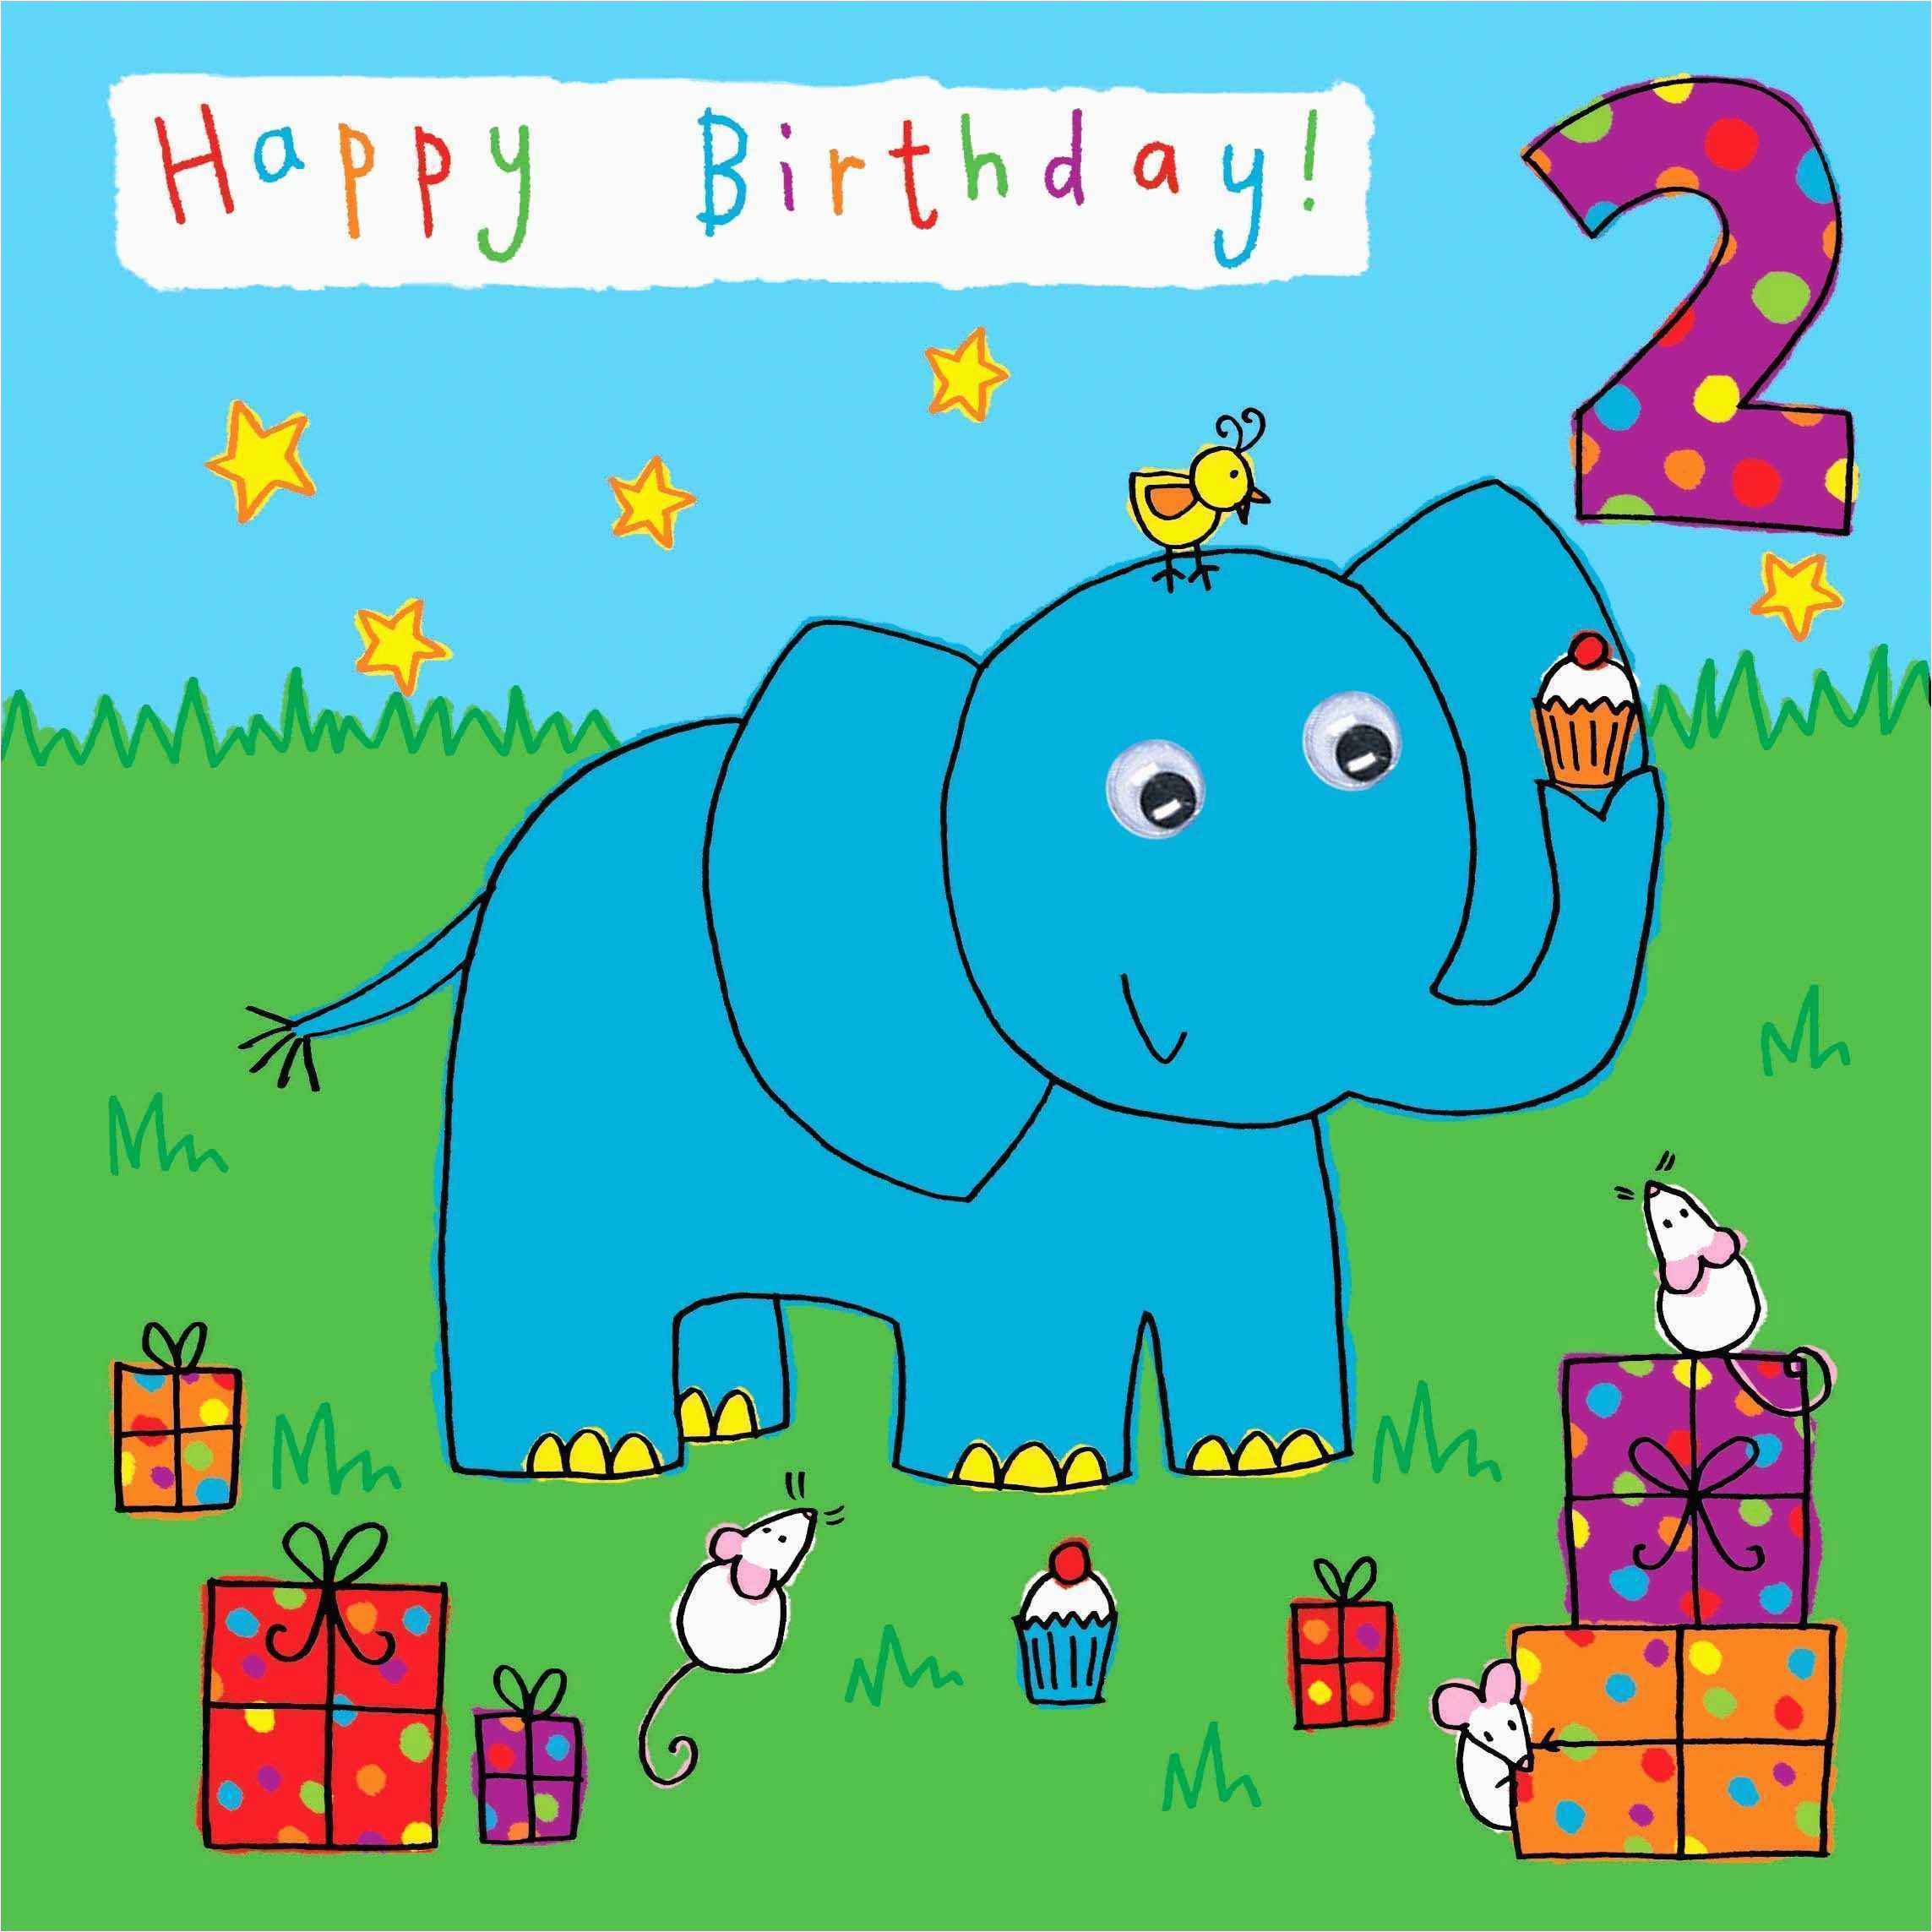 Childrens Email Birthday Cards Email Birthday Cards Best Of Email Birthday Cards for Kids